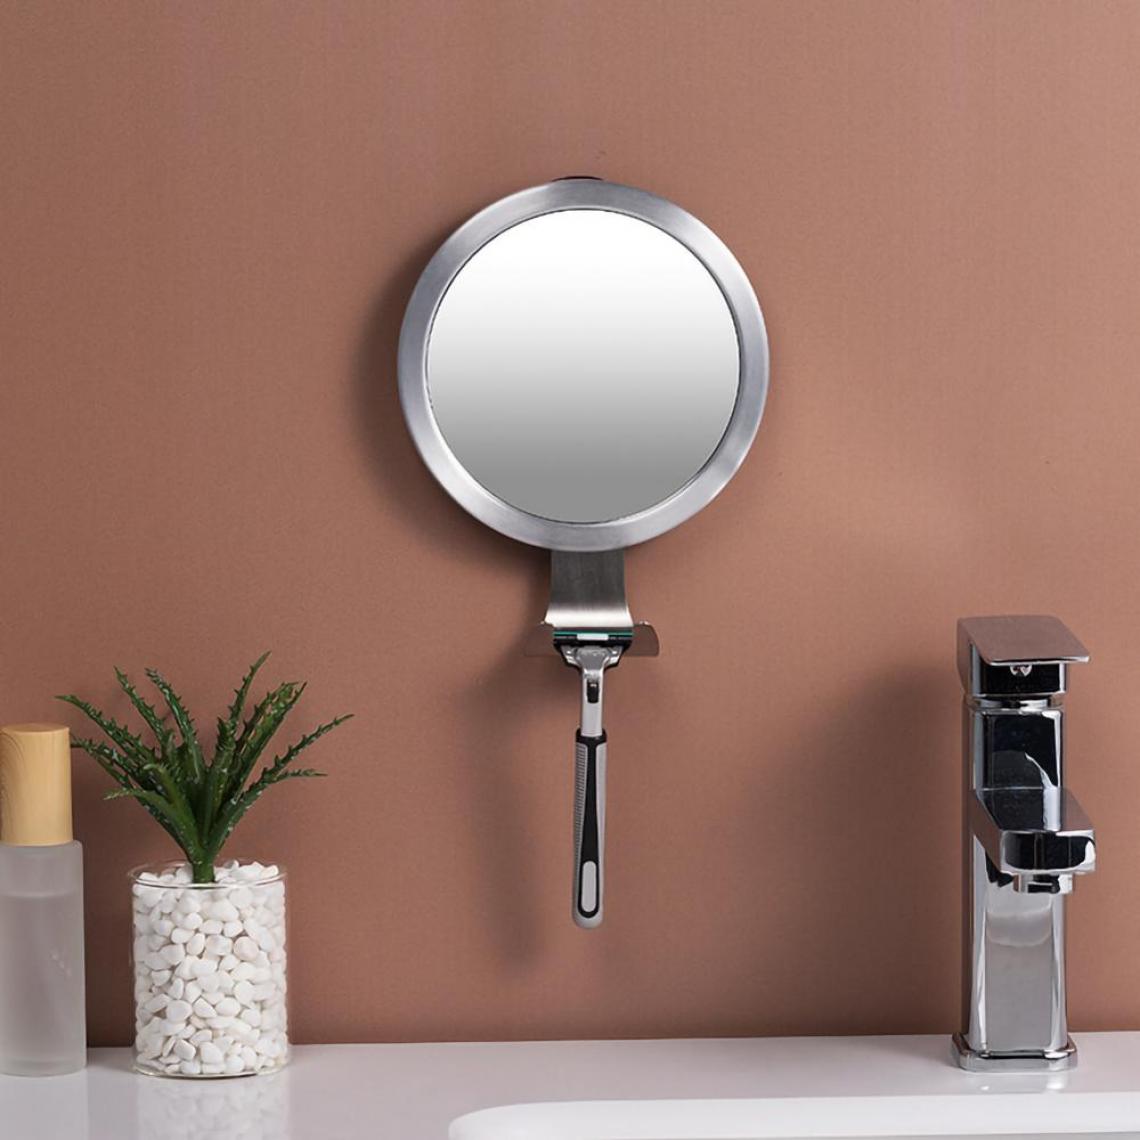 Universal - Miroir de salle de bains acier inoxydable anti-brouillard miroir de douche salle de bains miroir de rasage miroir de toilette mural ventouse pour salle de bain(Argent) - Miroir de salle de bain